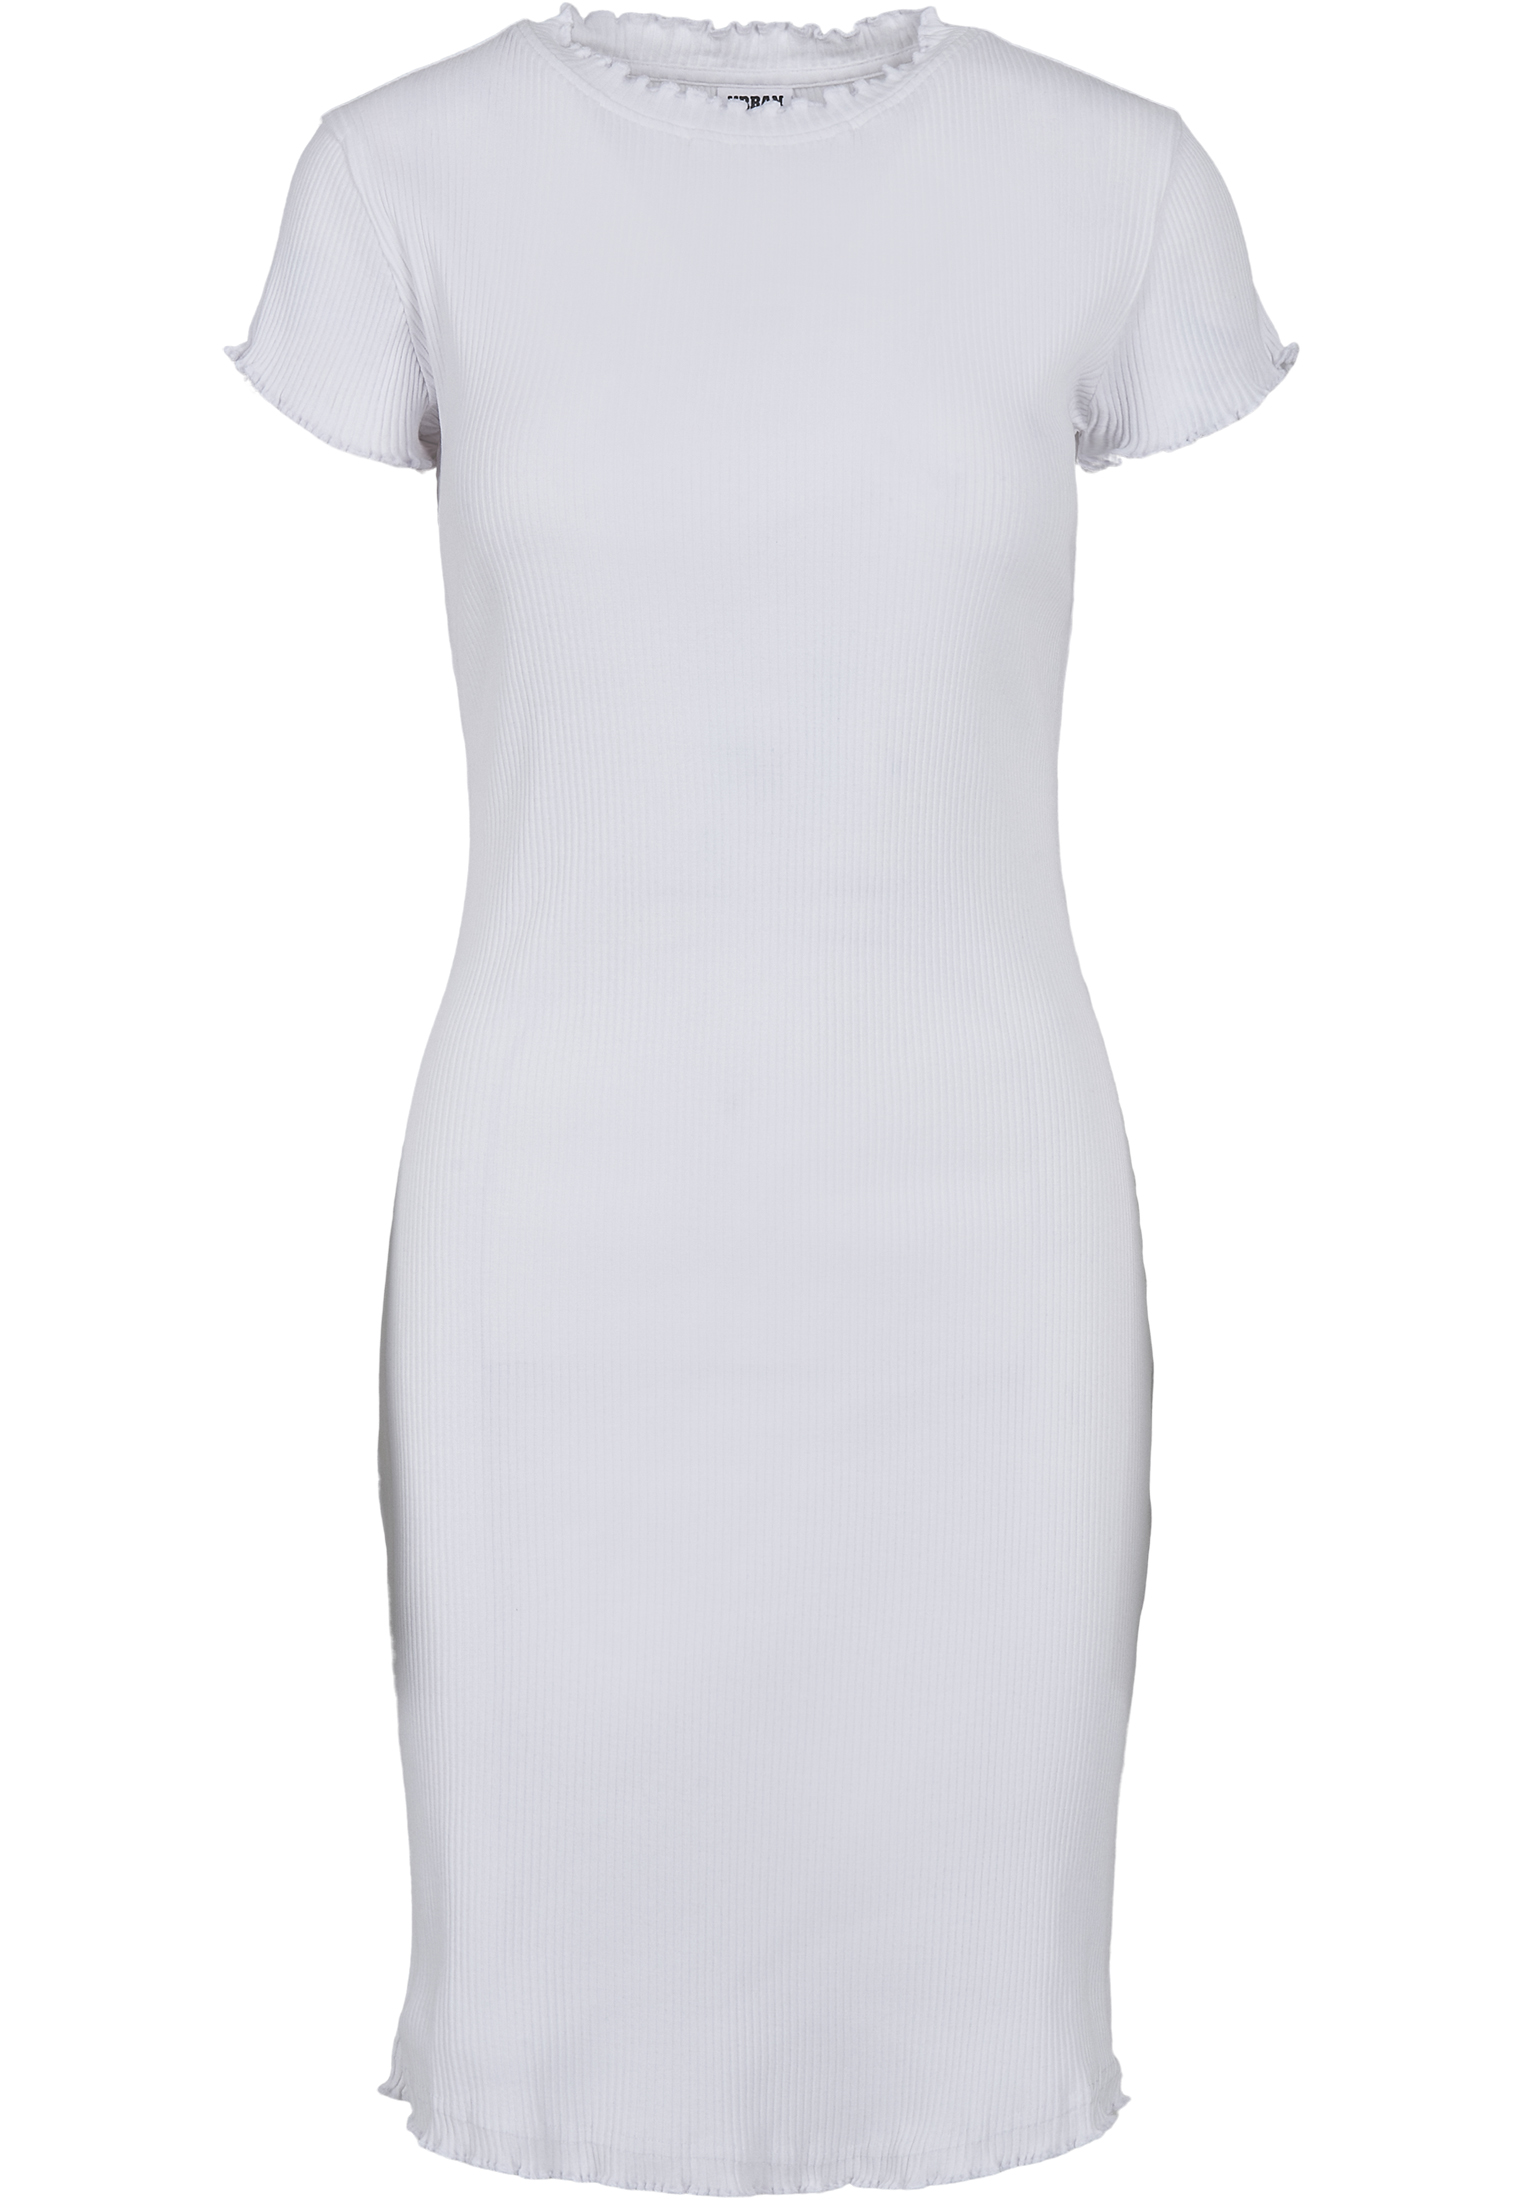 Curvy Ladies Rib Tee Dress in Farbe white